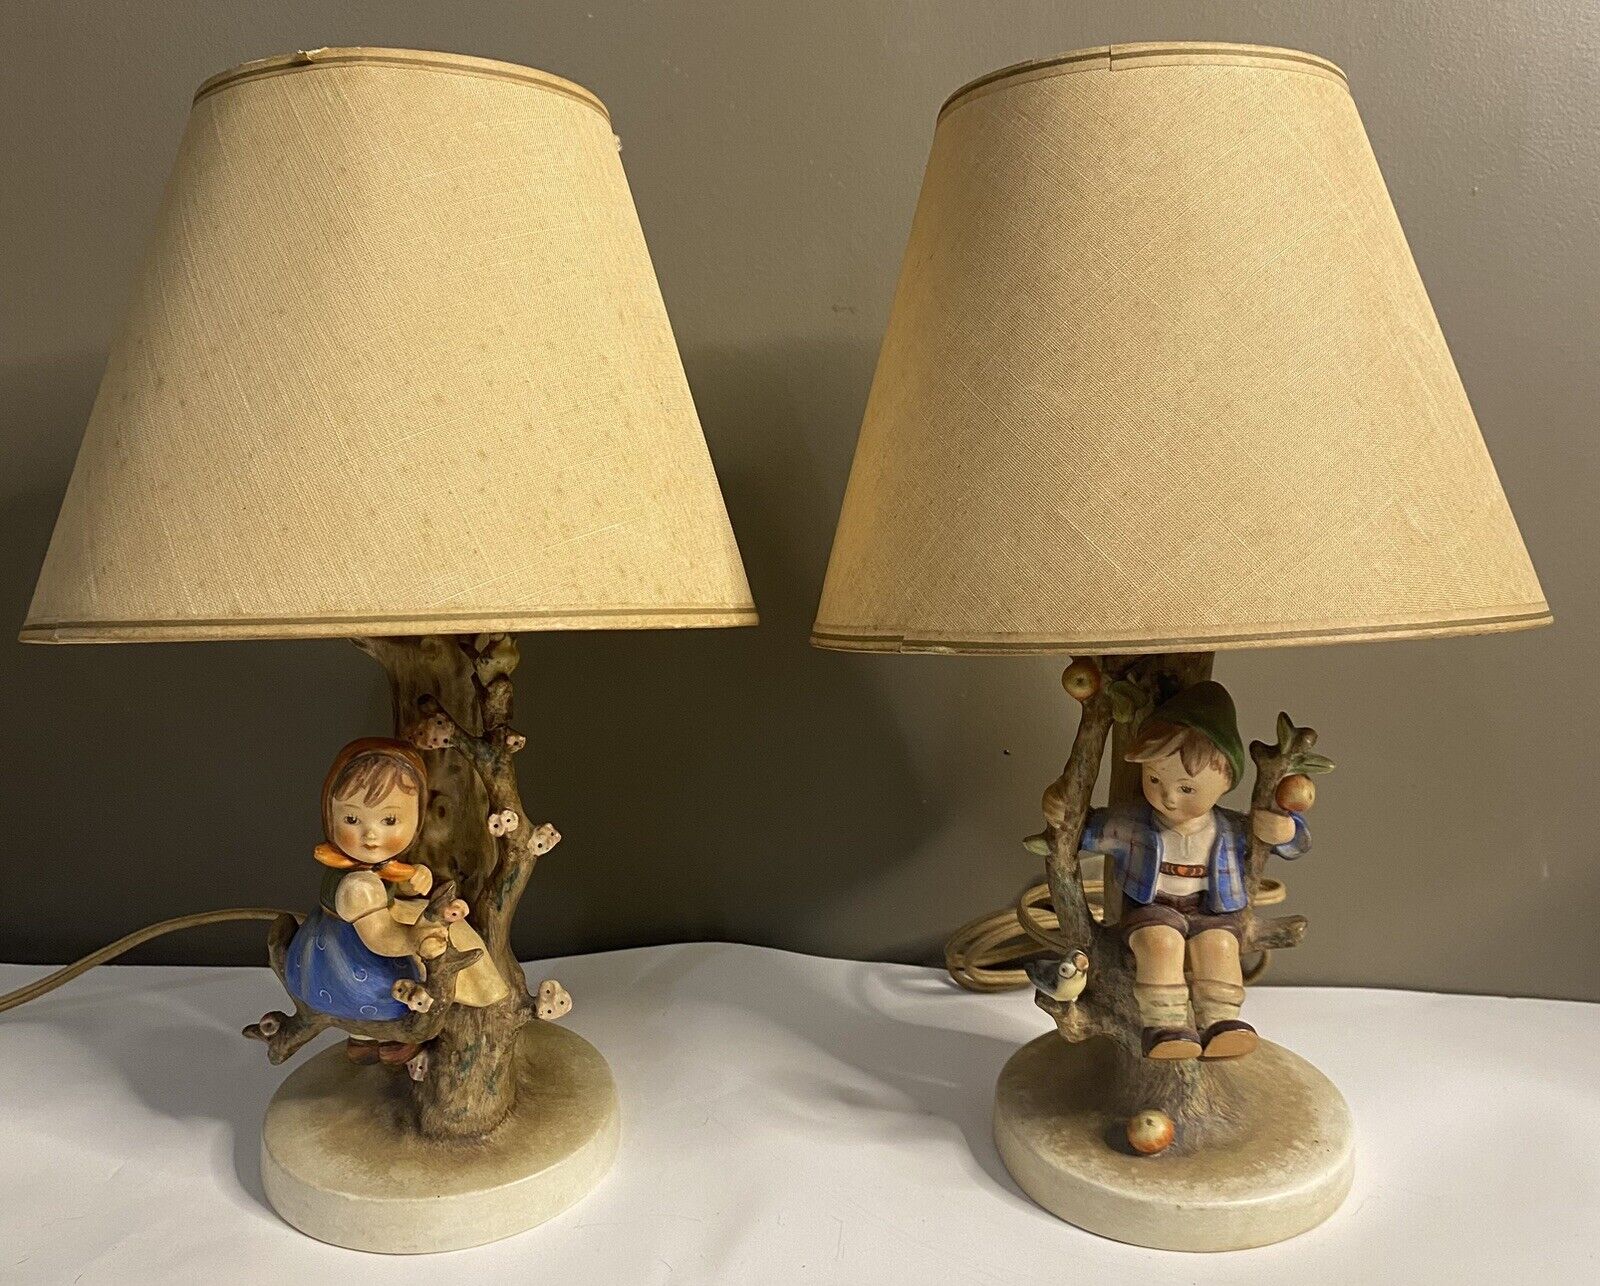 Vtg Pair of Hummel Figurine Apple Tree Boy + Girl Hummel Lamps ORIGINAL SHADES